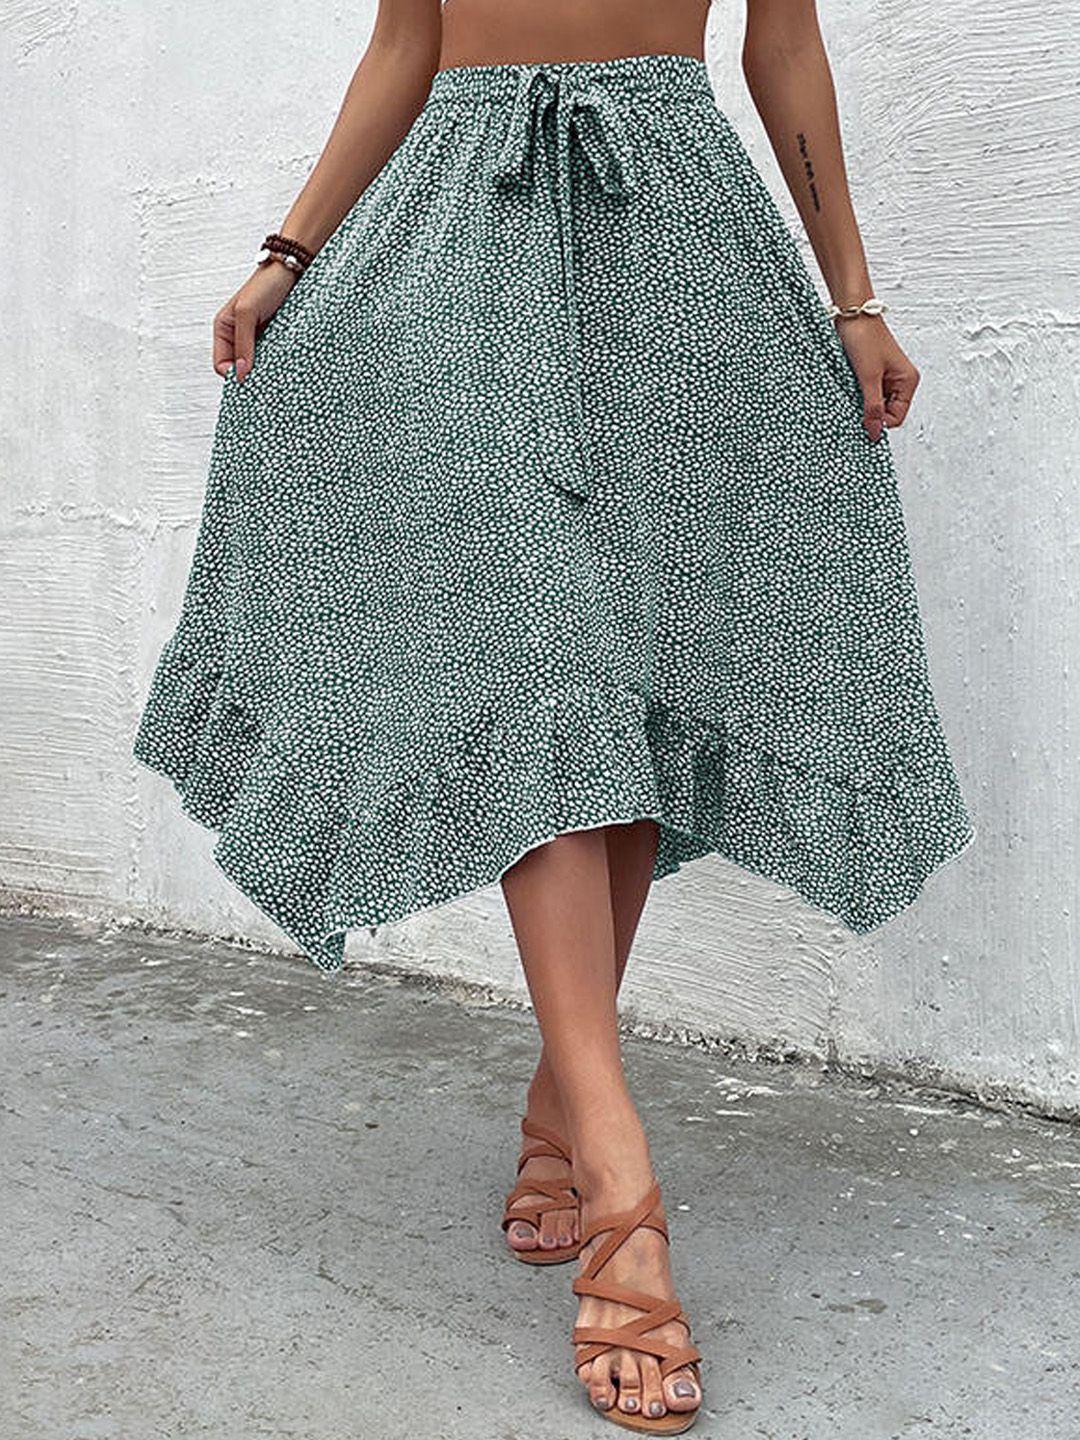 stylecast printed flared midi skirt